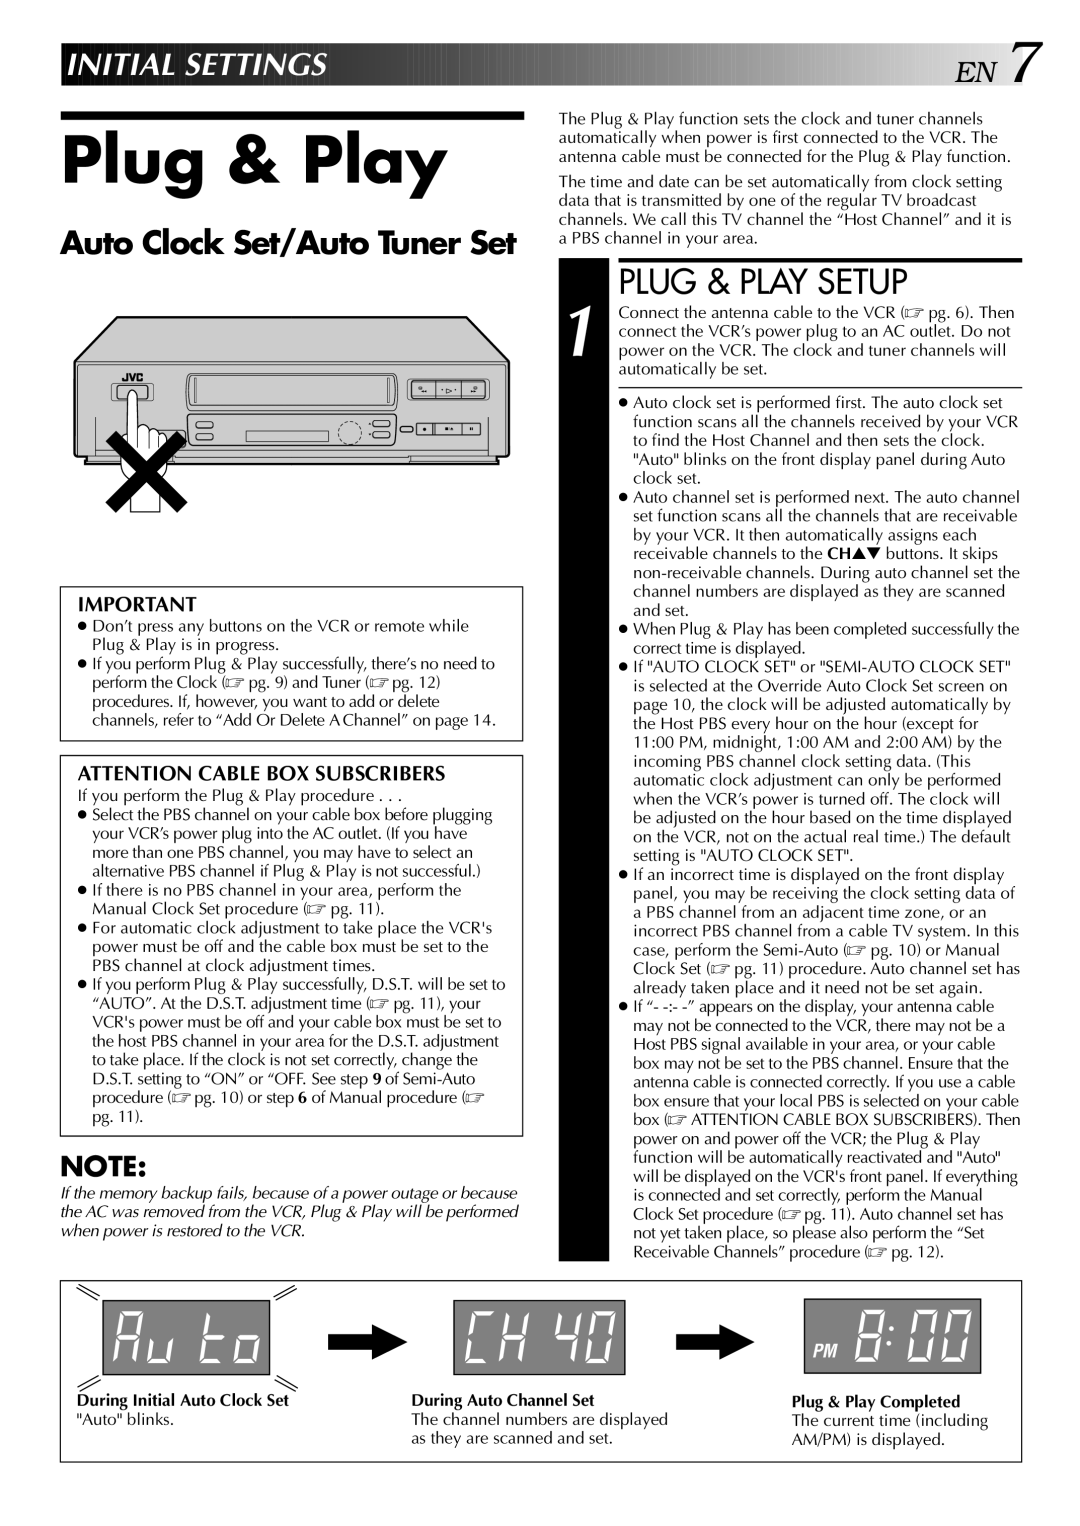 JVC HR-J642U manual Plug & Play Setup, Initial Settings, Auto Clock Set/Auto Tuner Set 